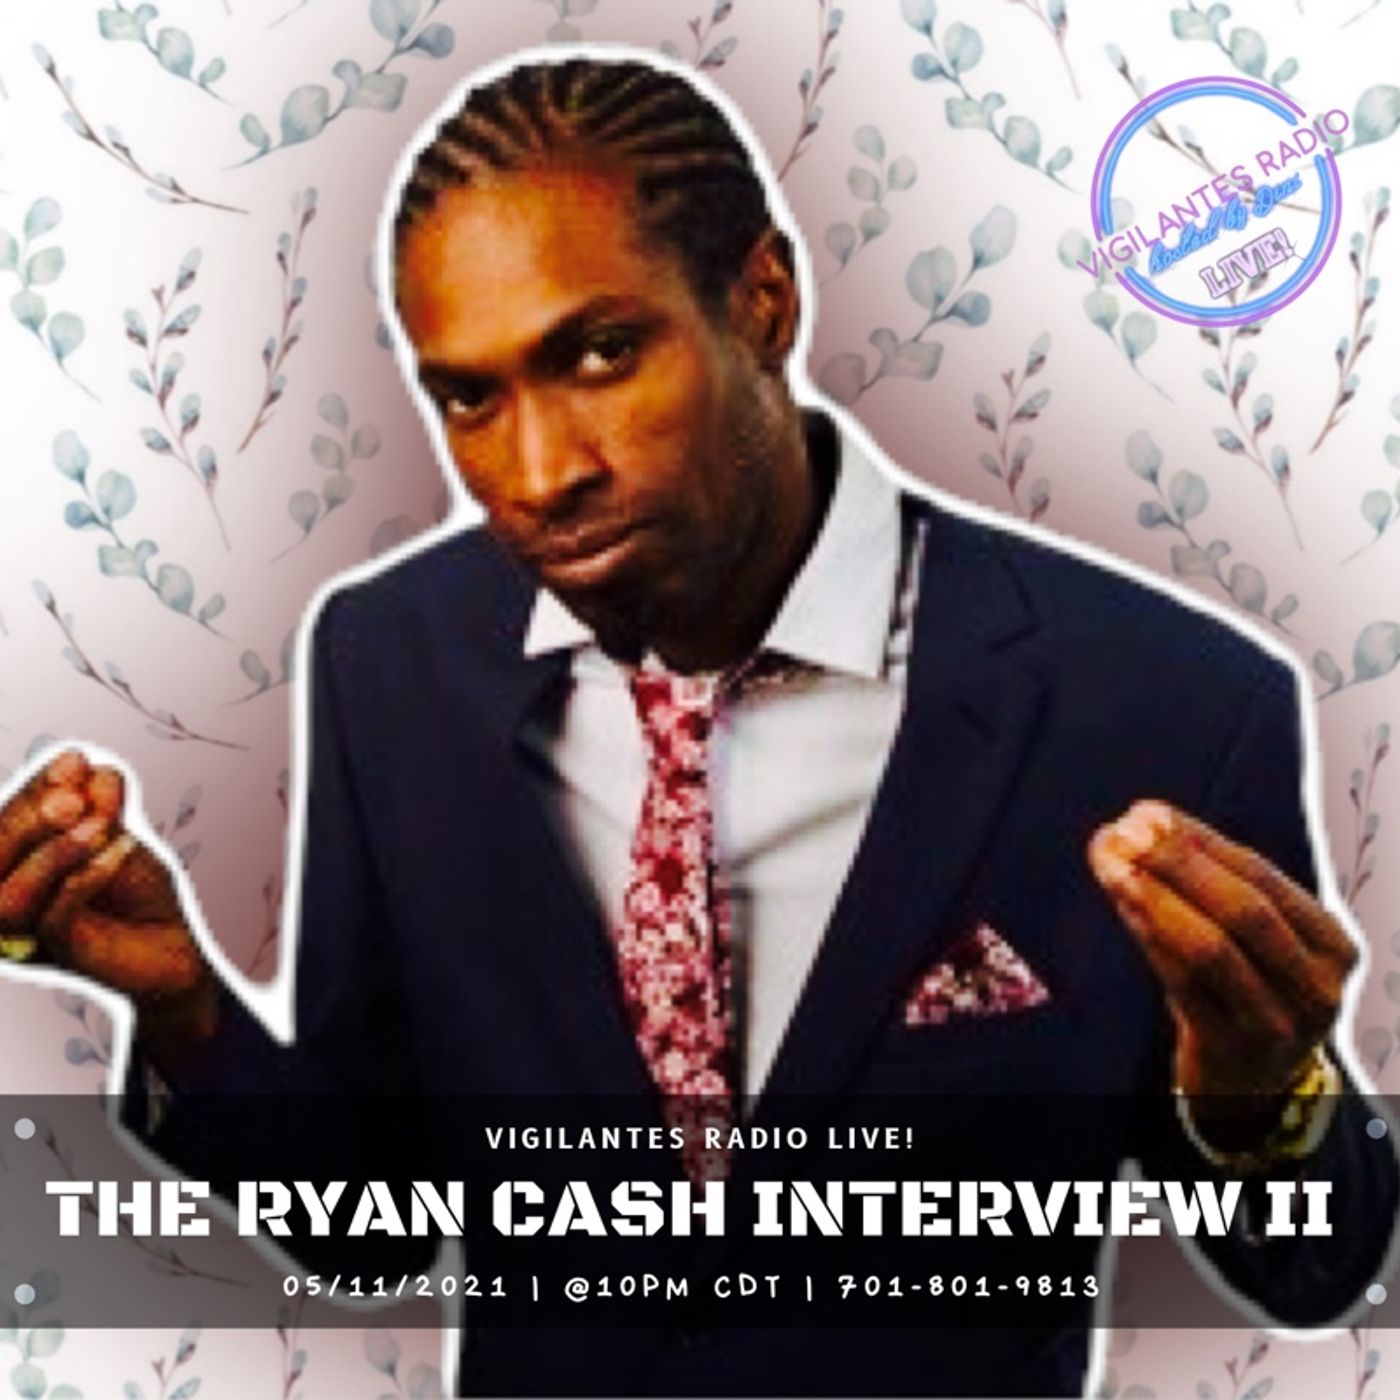 The Ryan Cash Interview II. Image